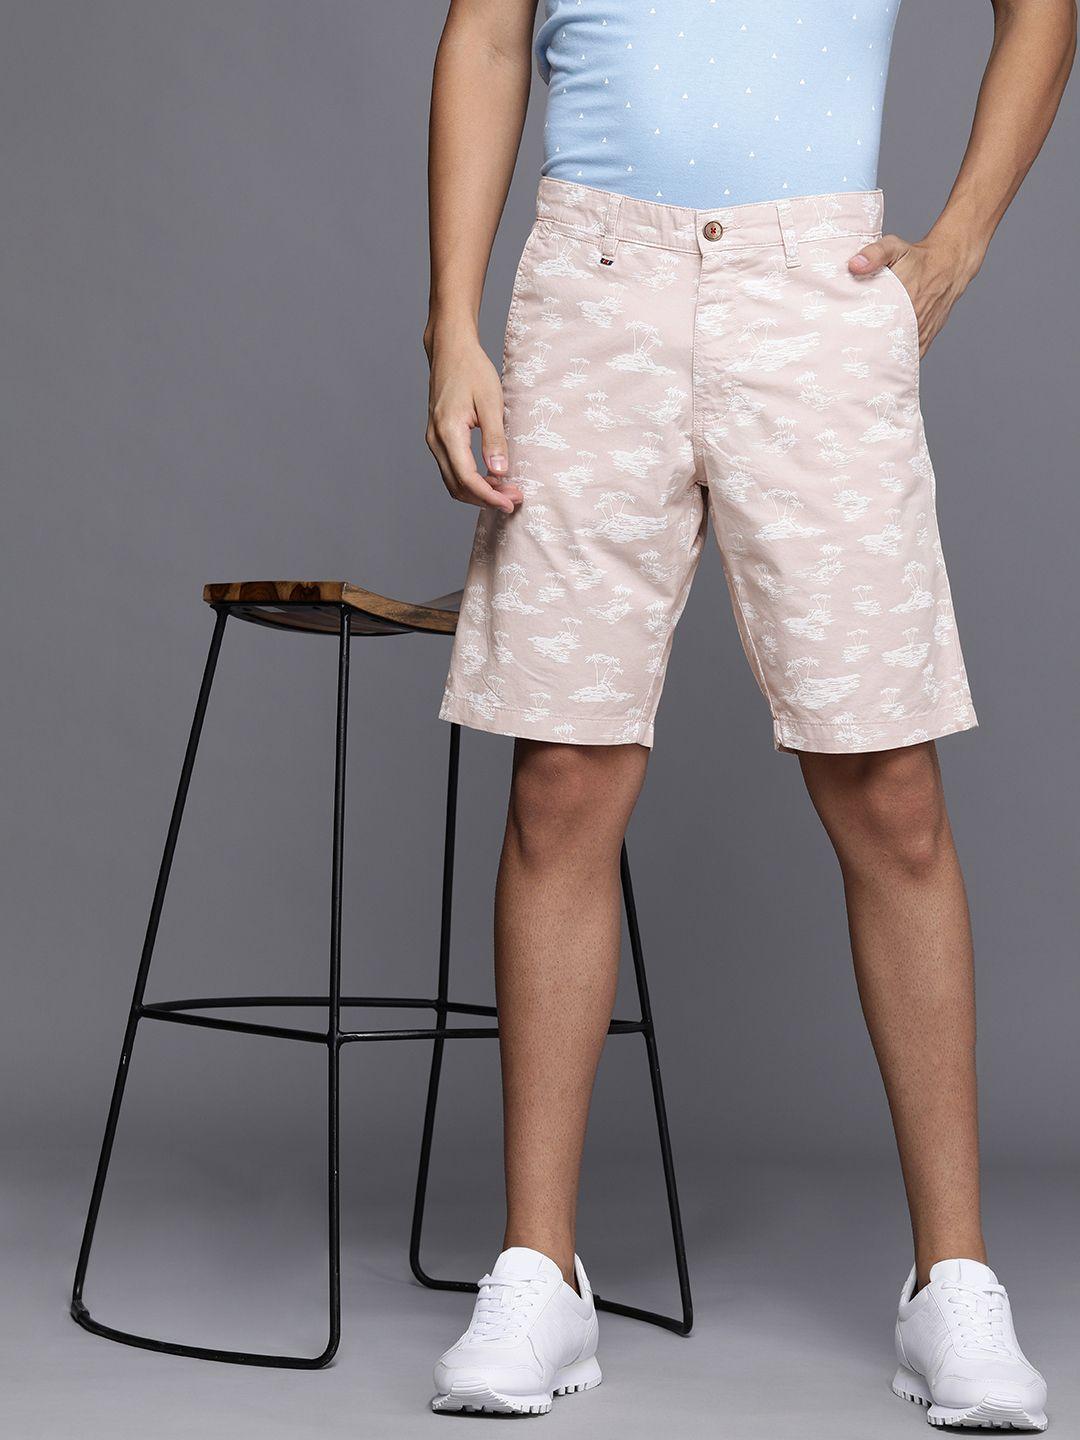 louis philippe sport men pink conversational print  regular fit chinos shorts